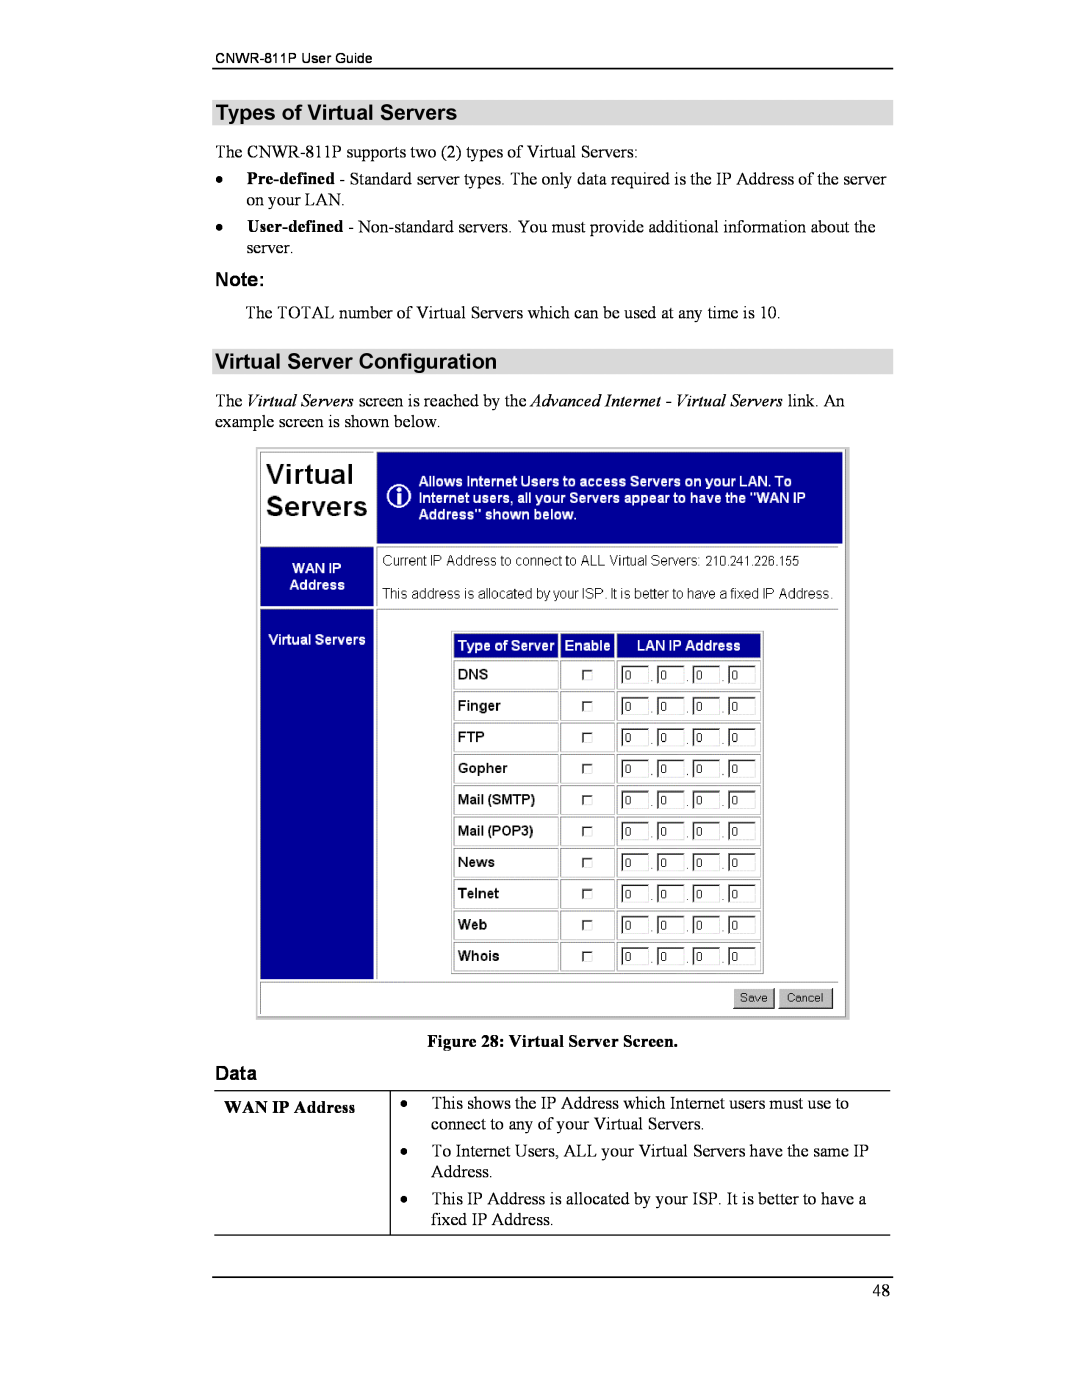 CNET CNWR-811P manual Types of Virtual Servers, Virtual Server Configuration, Data, Virtual Server Screen, WAN IP Address 